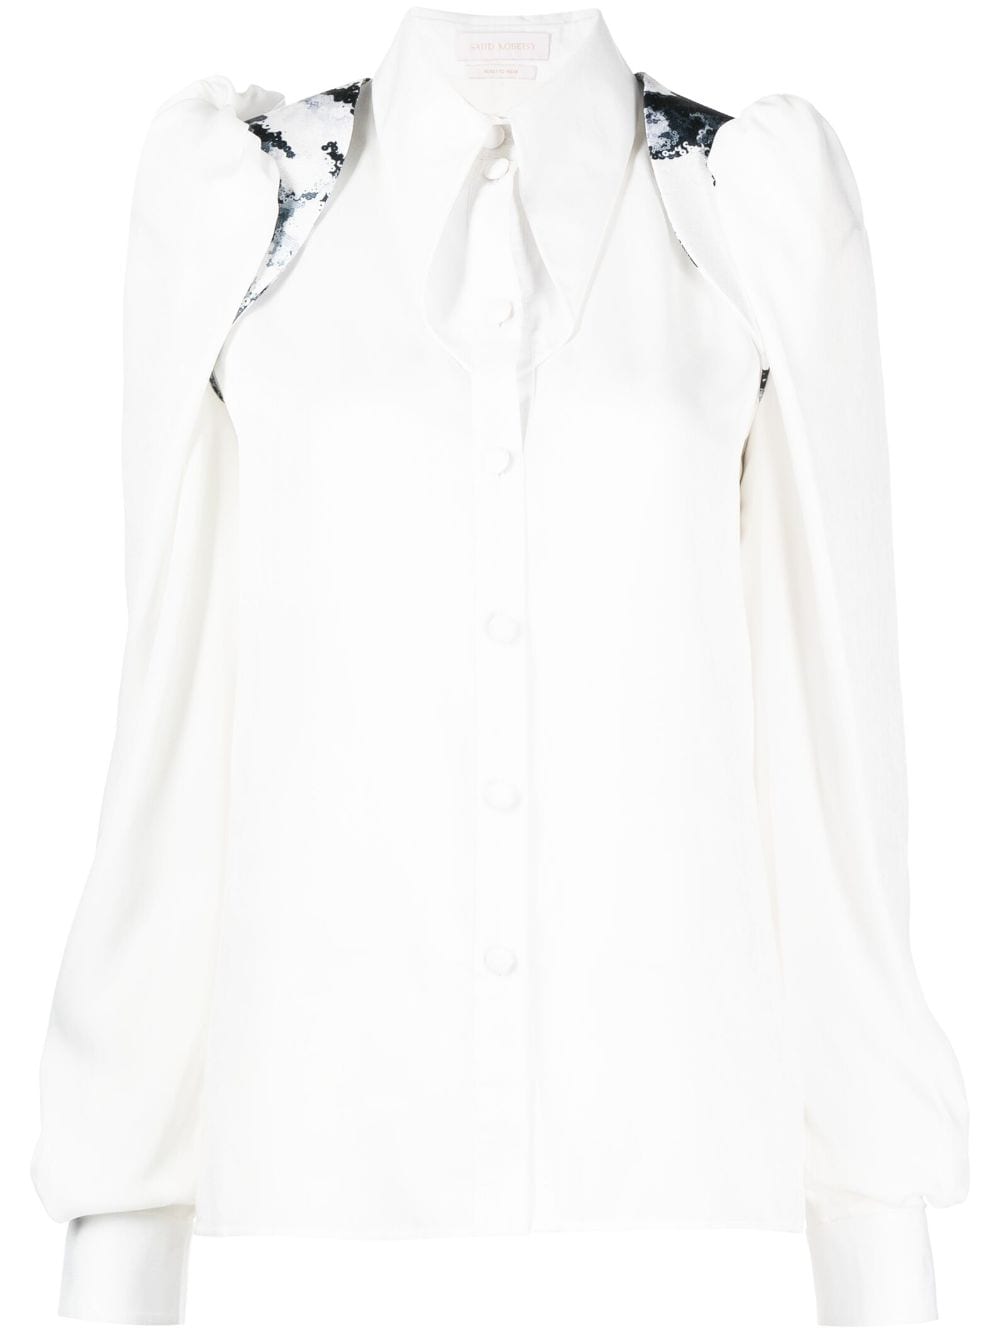 Saiid Kobeisy Oversized Pointed Collar Shirt In White